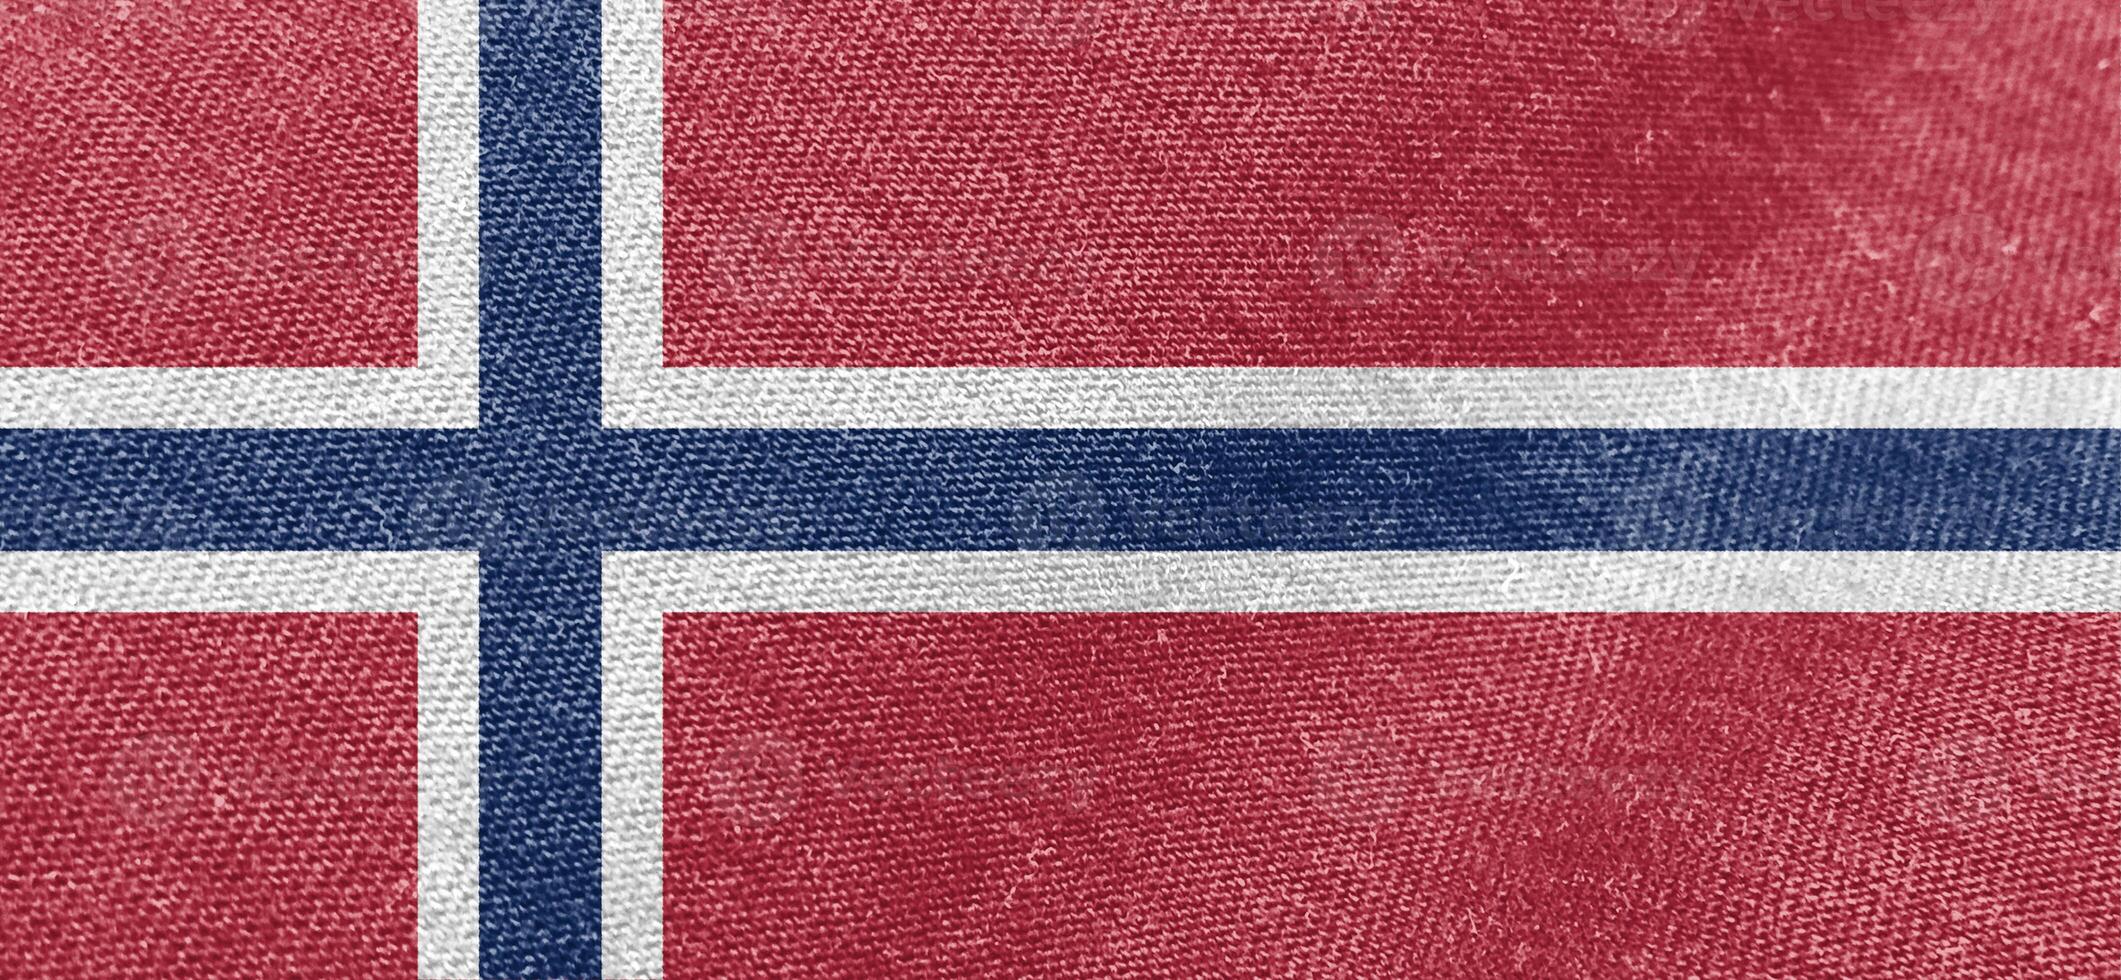 Noorwegen vlag kleding stof katoen materiaal breed vlag behang foto